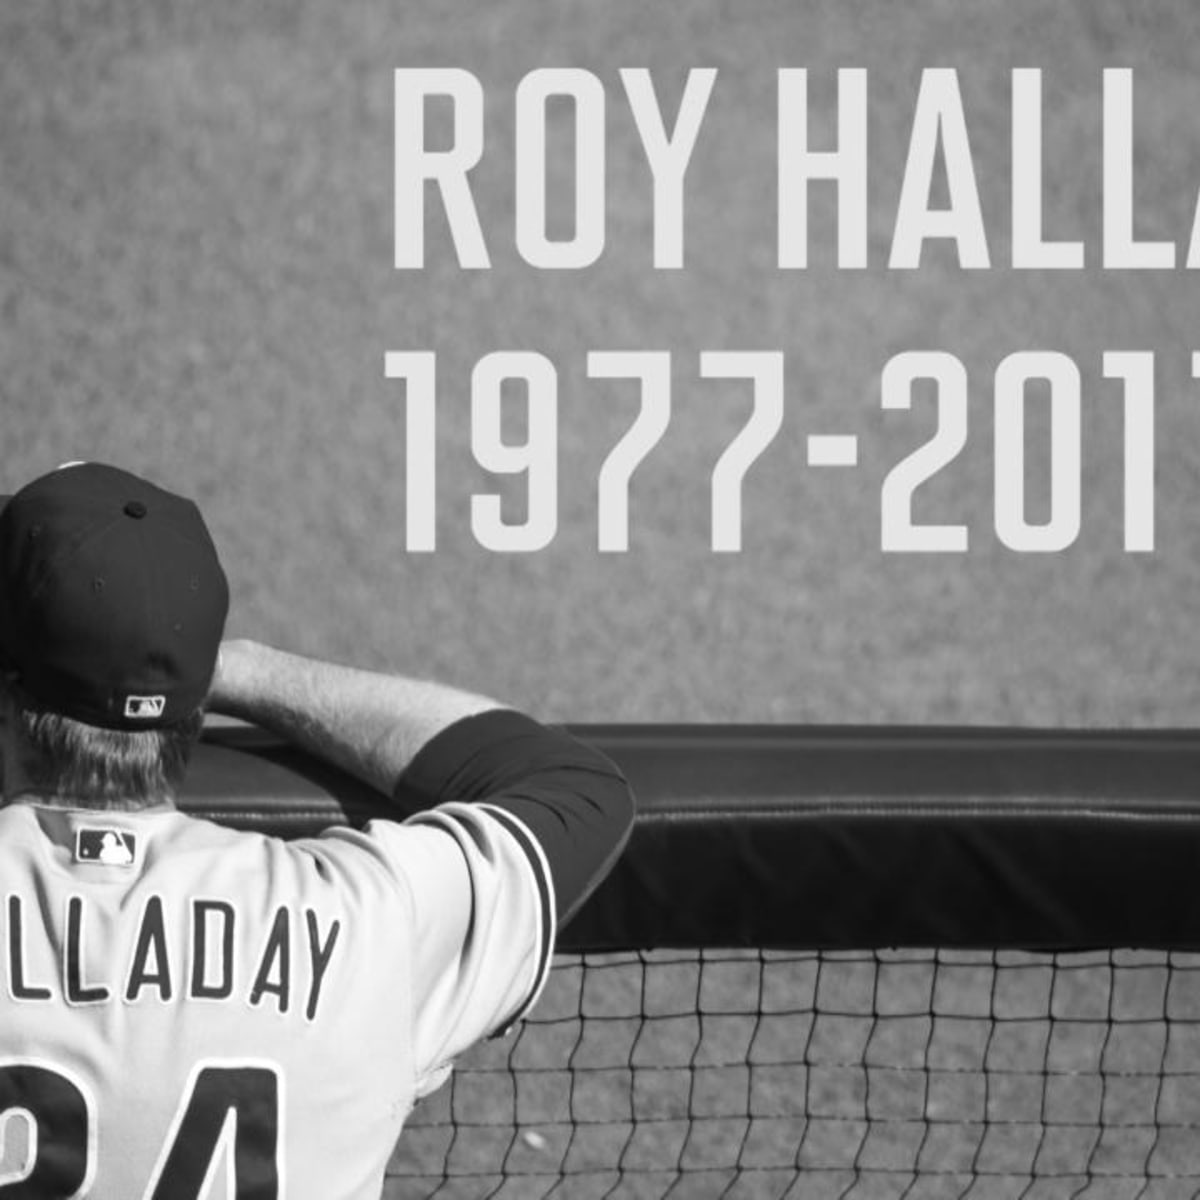 Former Major League Baseball pitcher Roy Halladay dies in plane